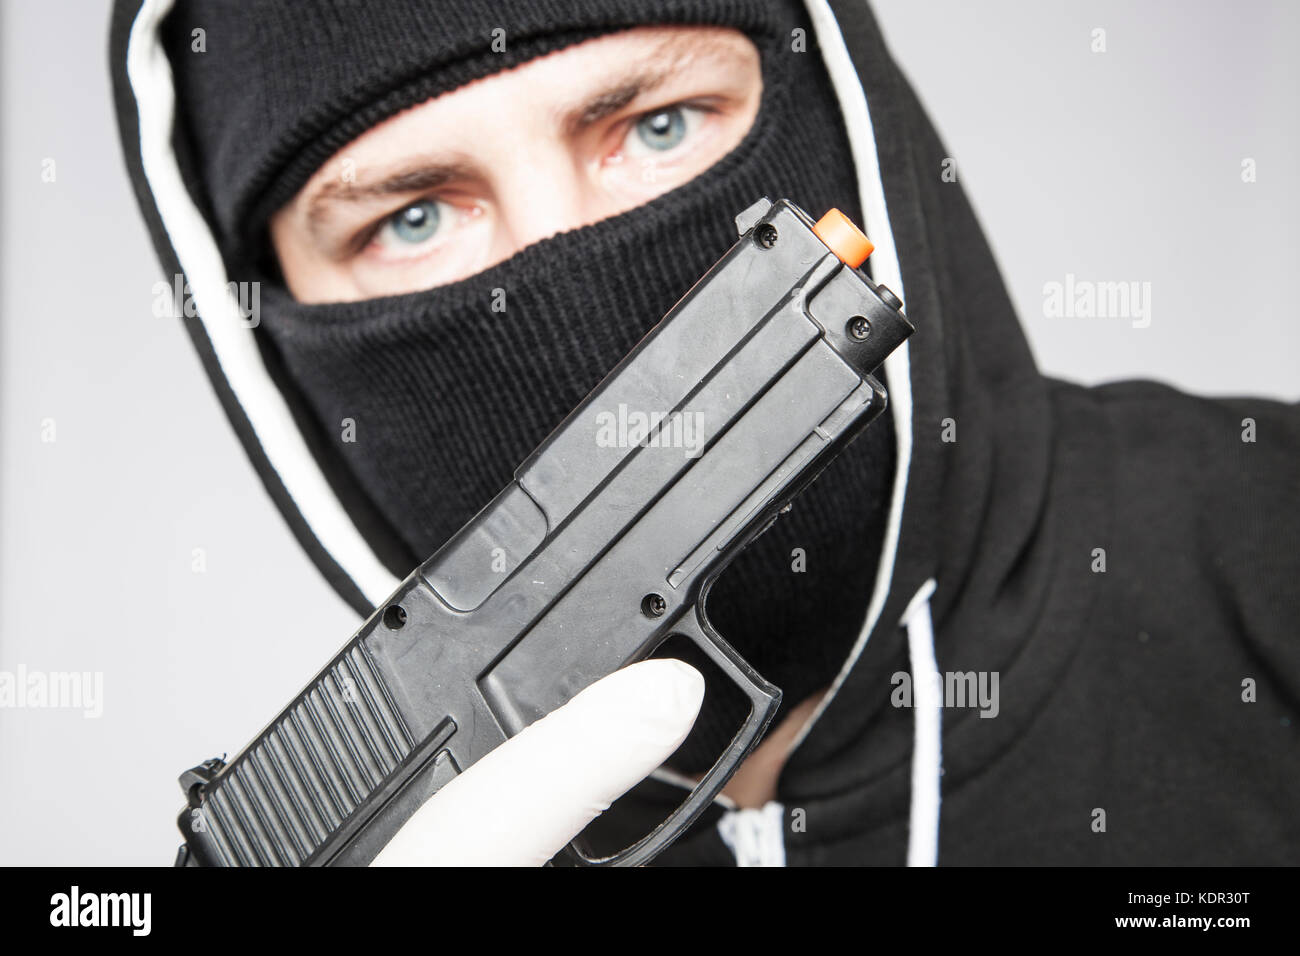 The terrorist shows the gun Stock Photo